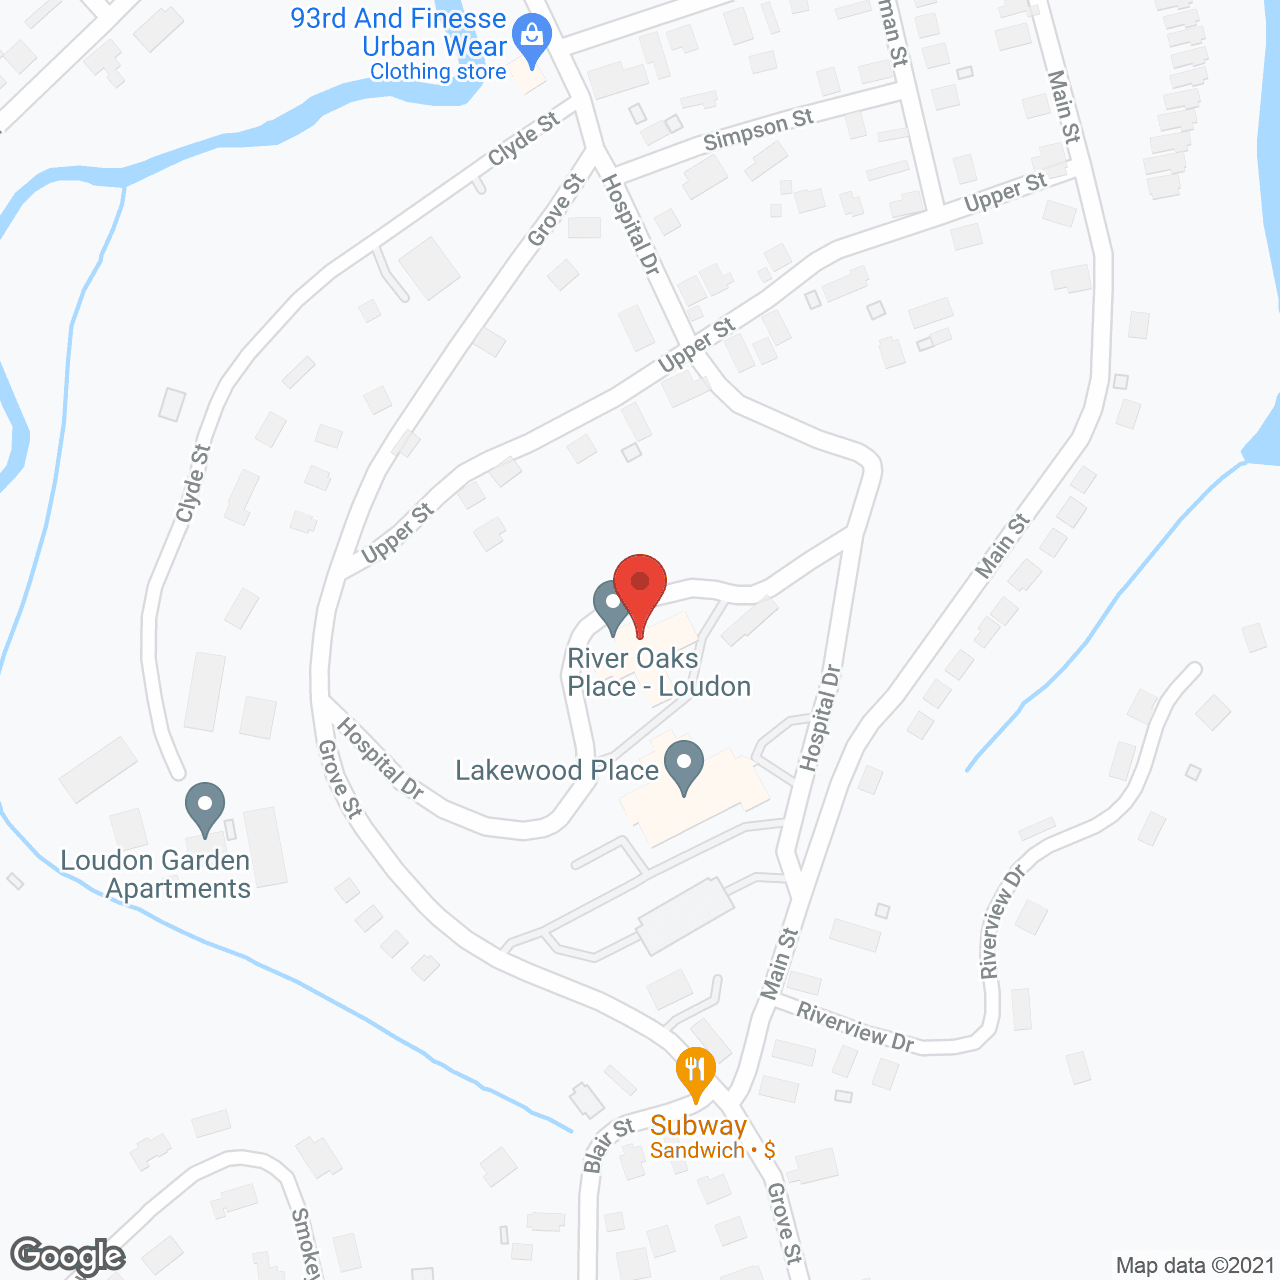 River Oaks Place - Loudon in google map